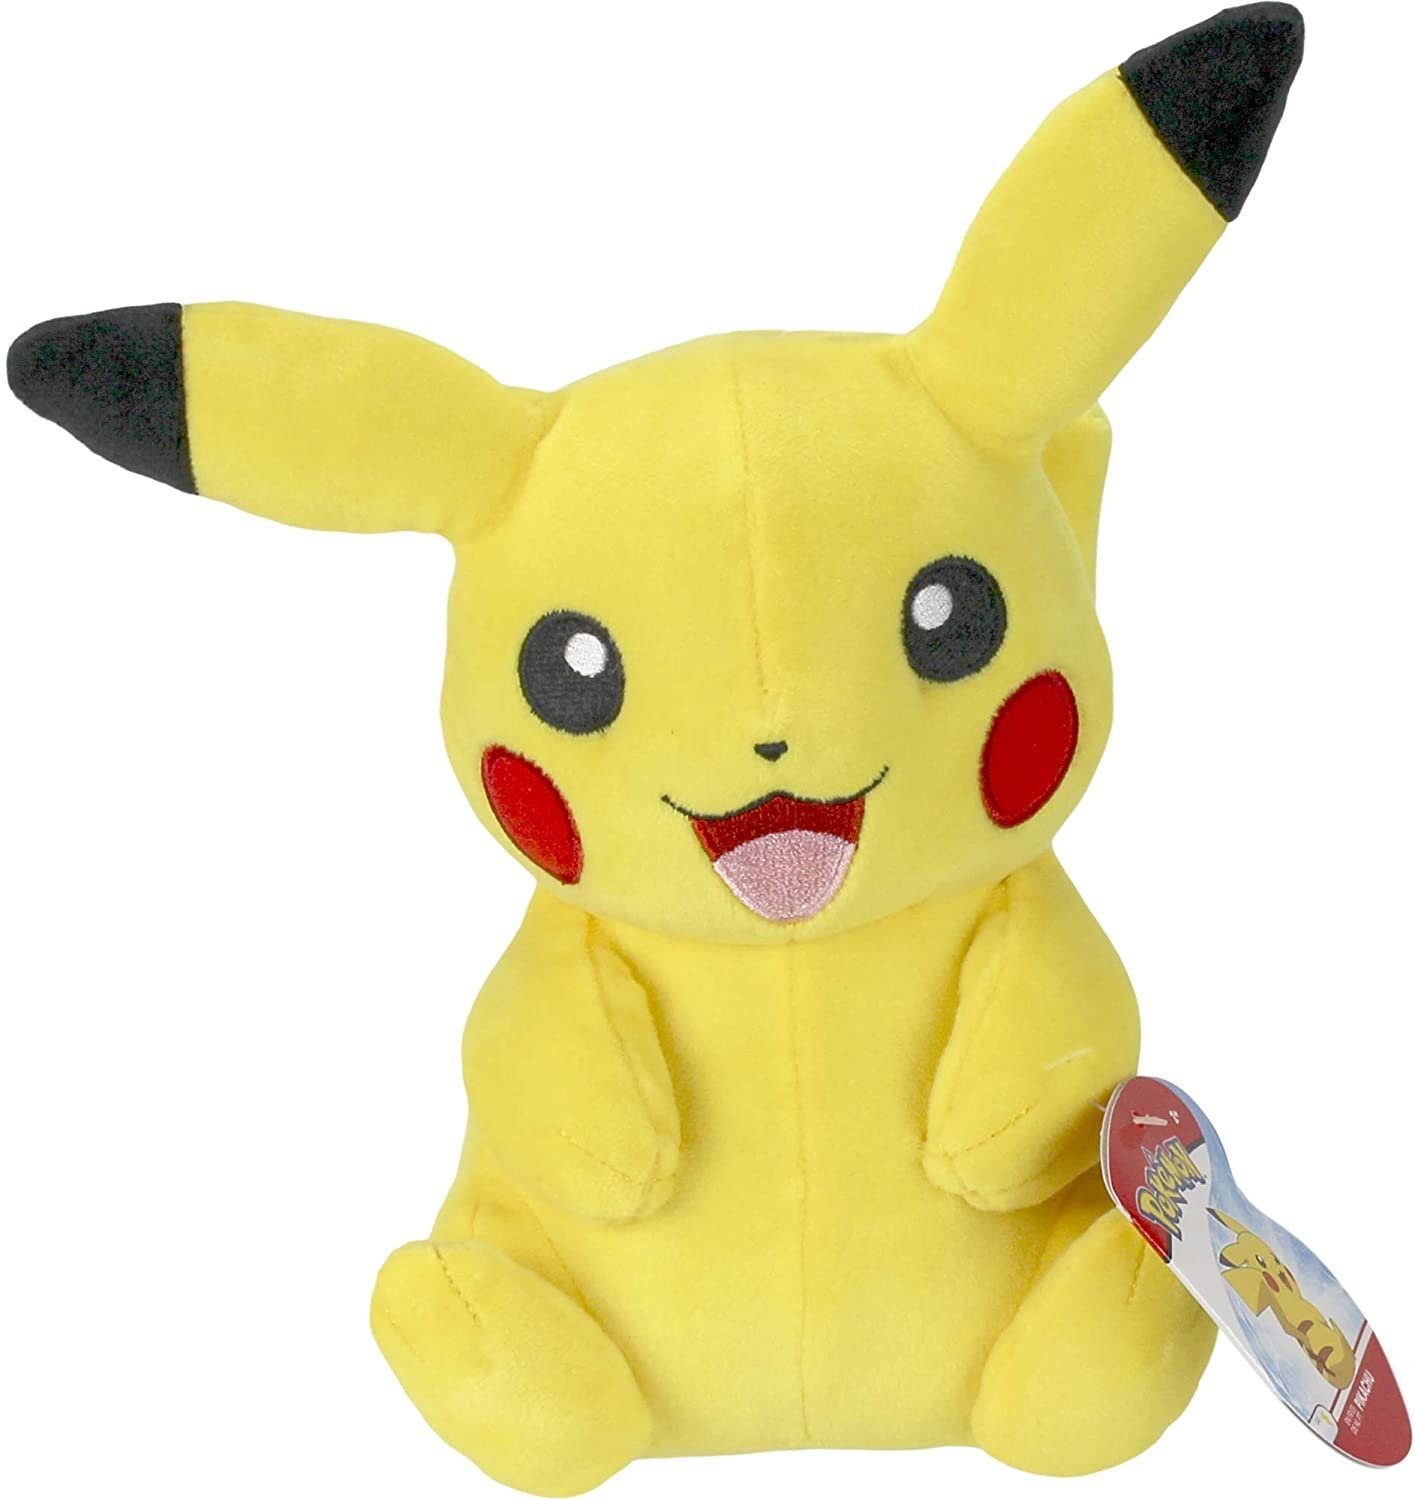 BOTI Plüschfigur Pikachu - Pokémon Kuscheltier - 21 cm